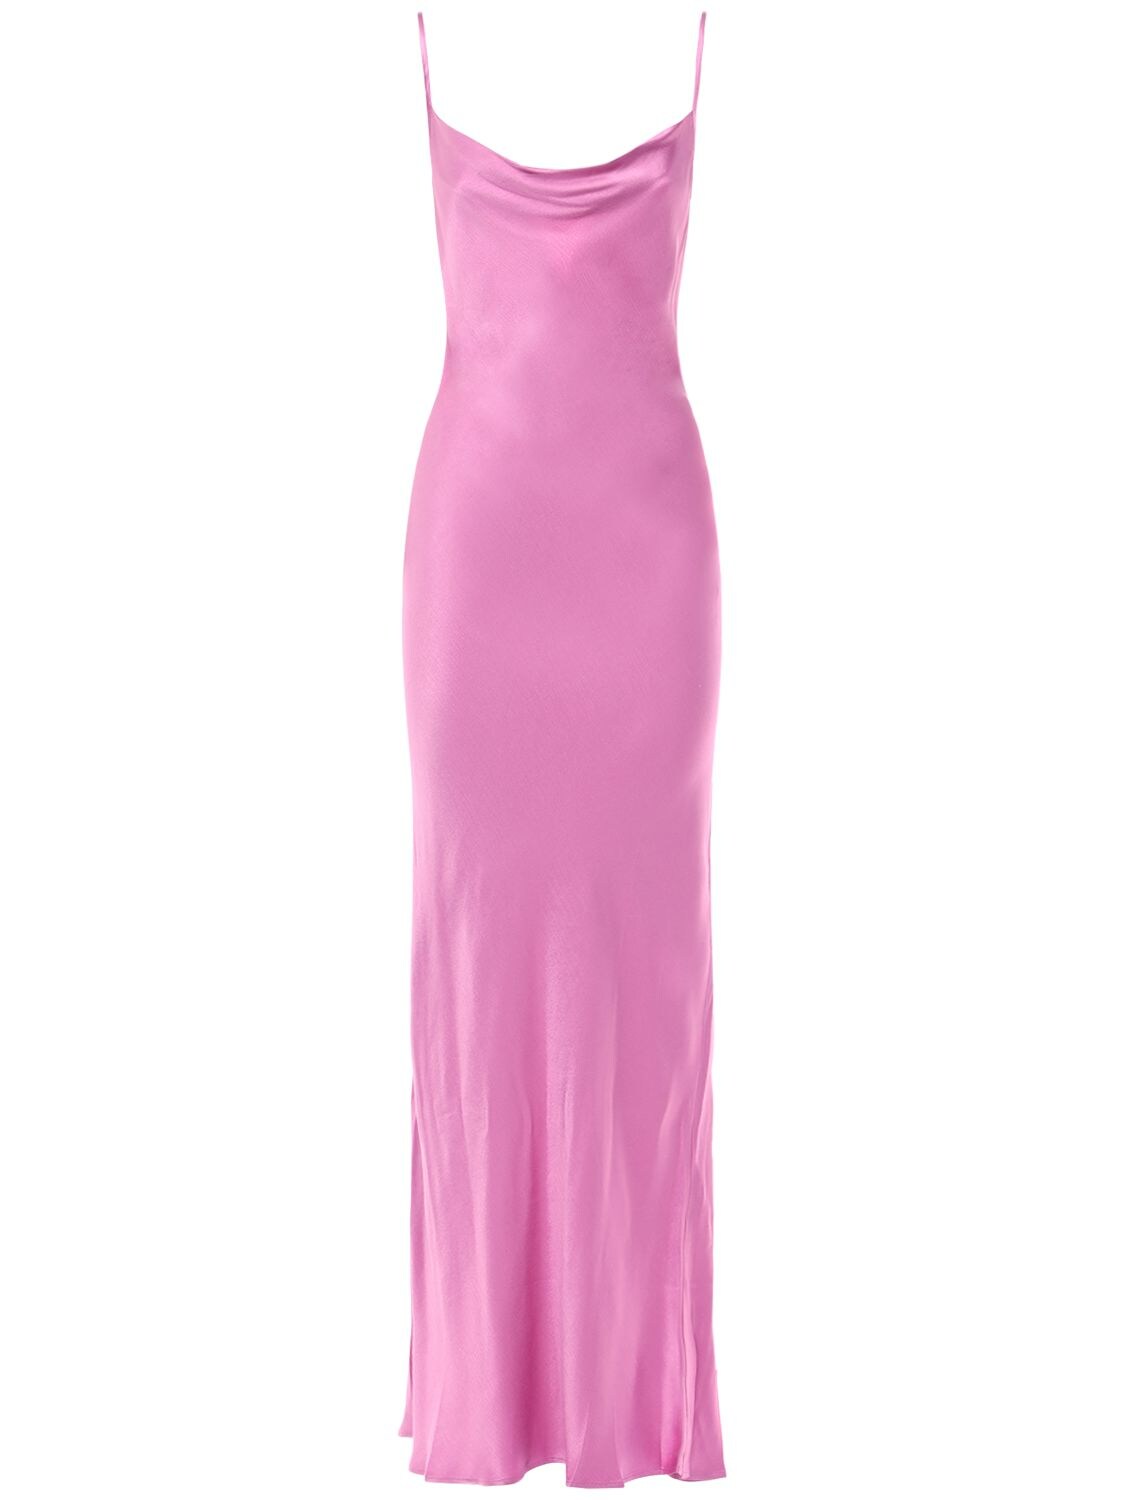 bec and bridge pink slip dress